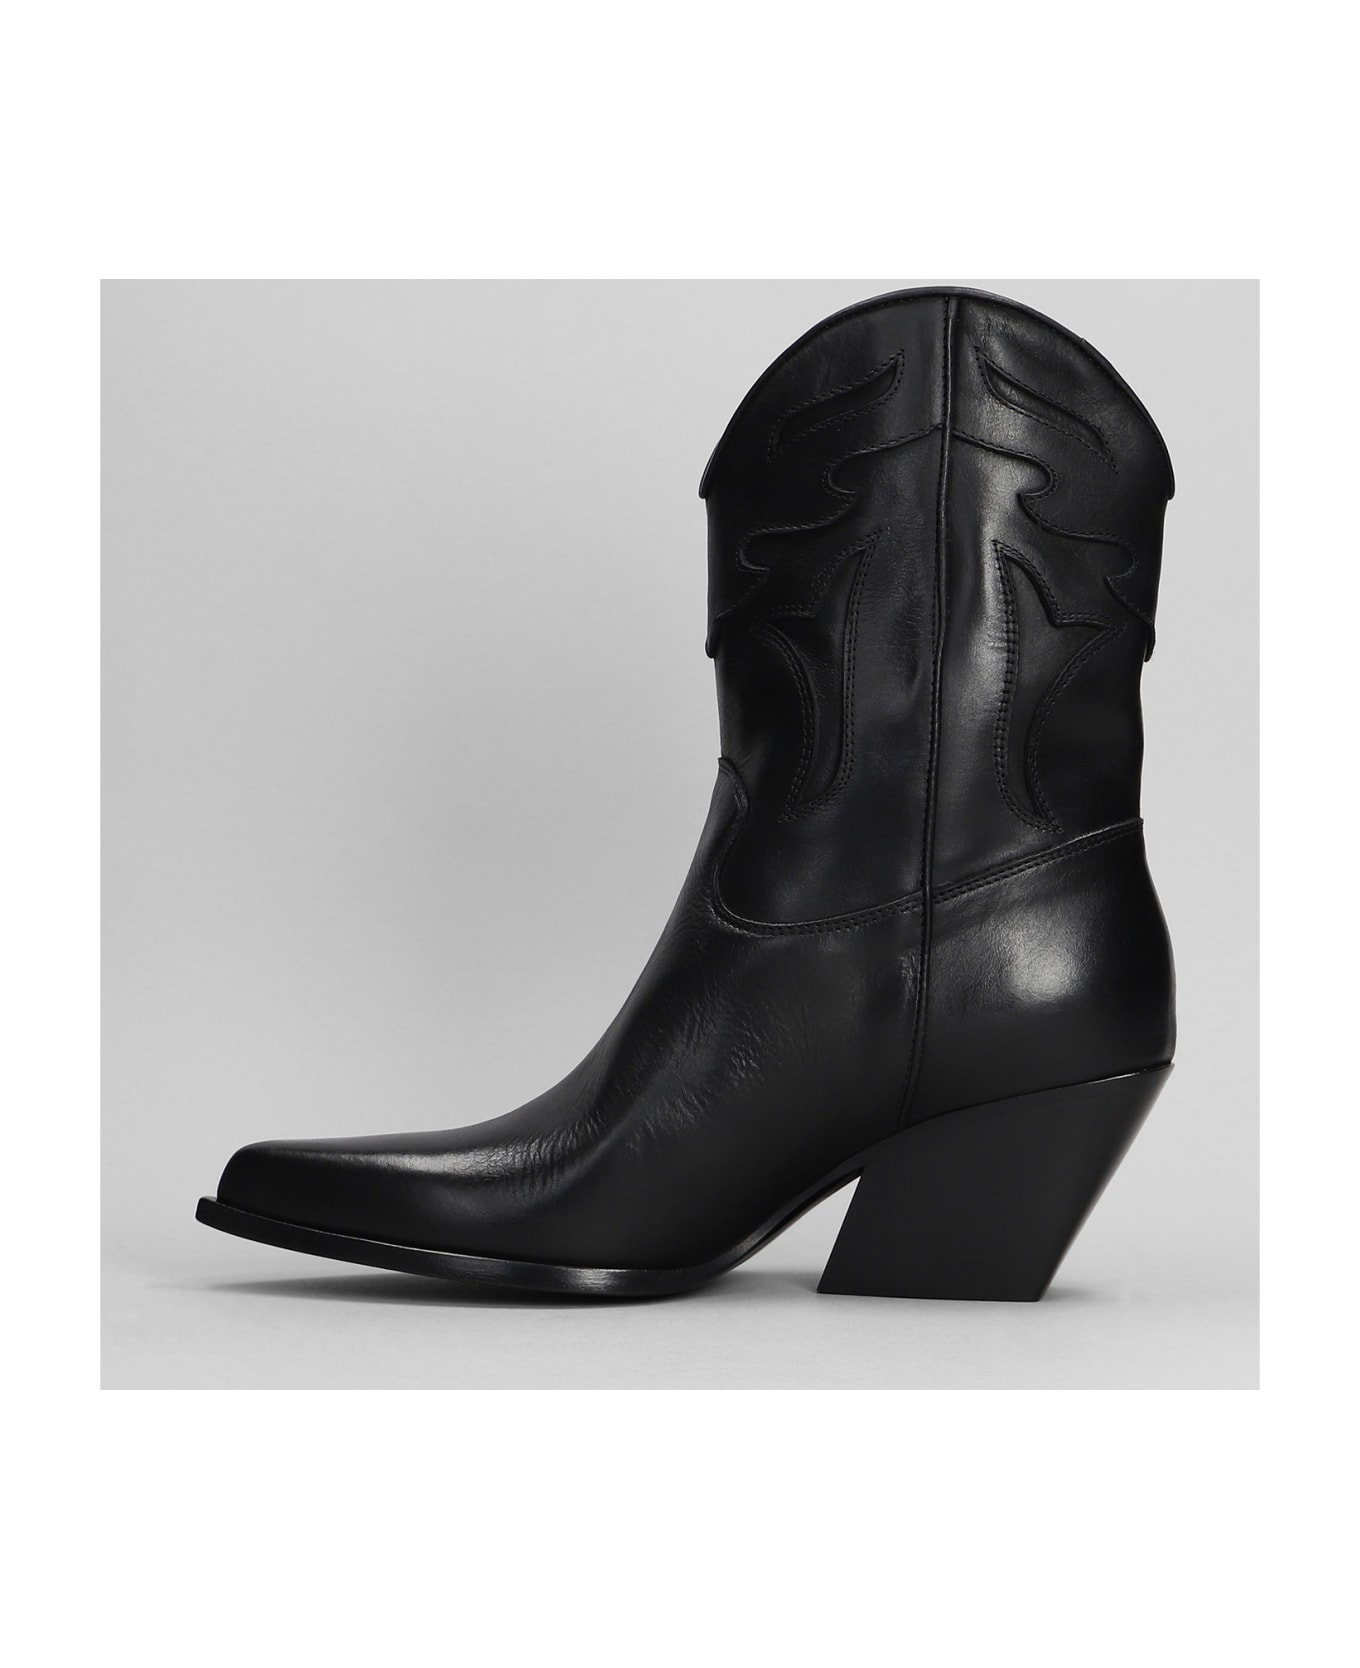 Elena Iachi Texan Ankle Boots In Black Leather - black ブーツ